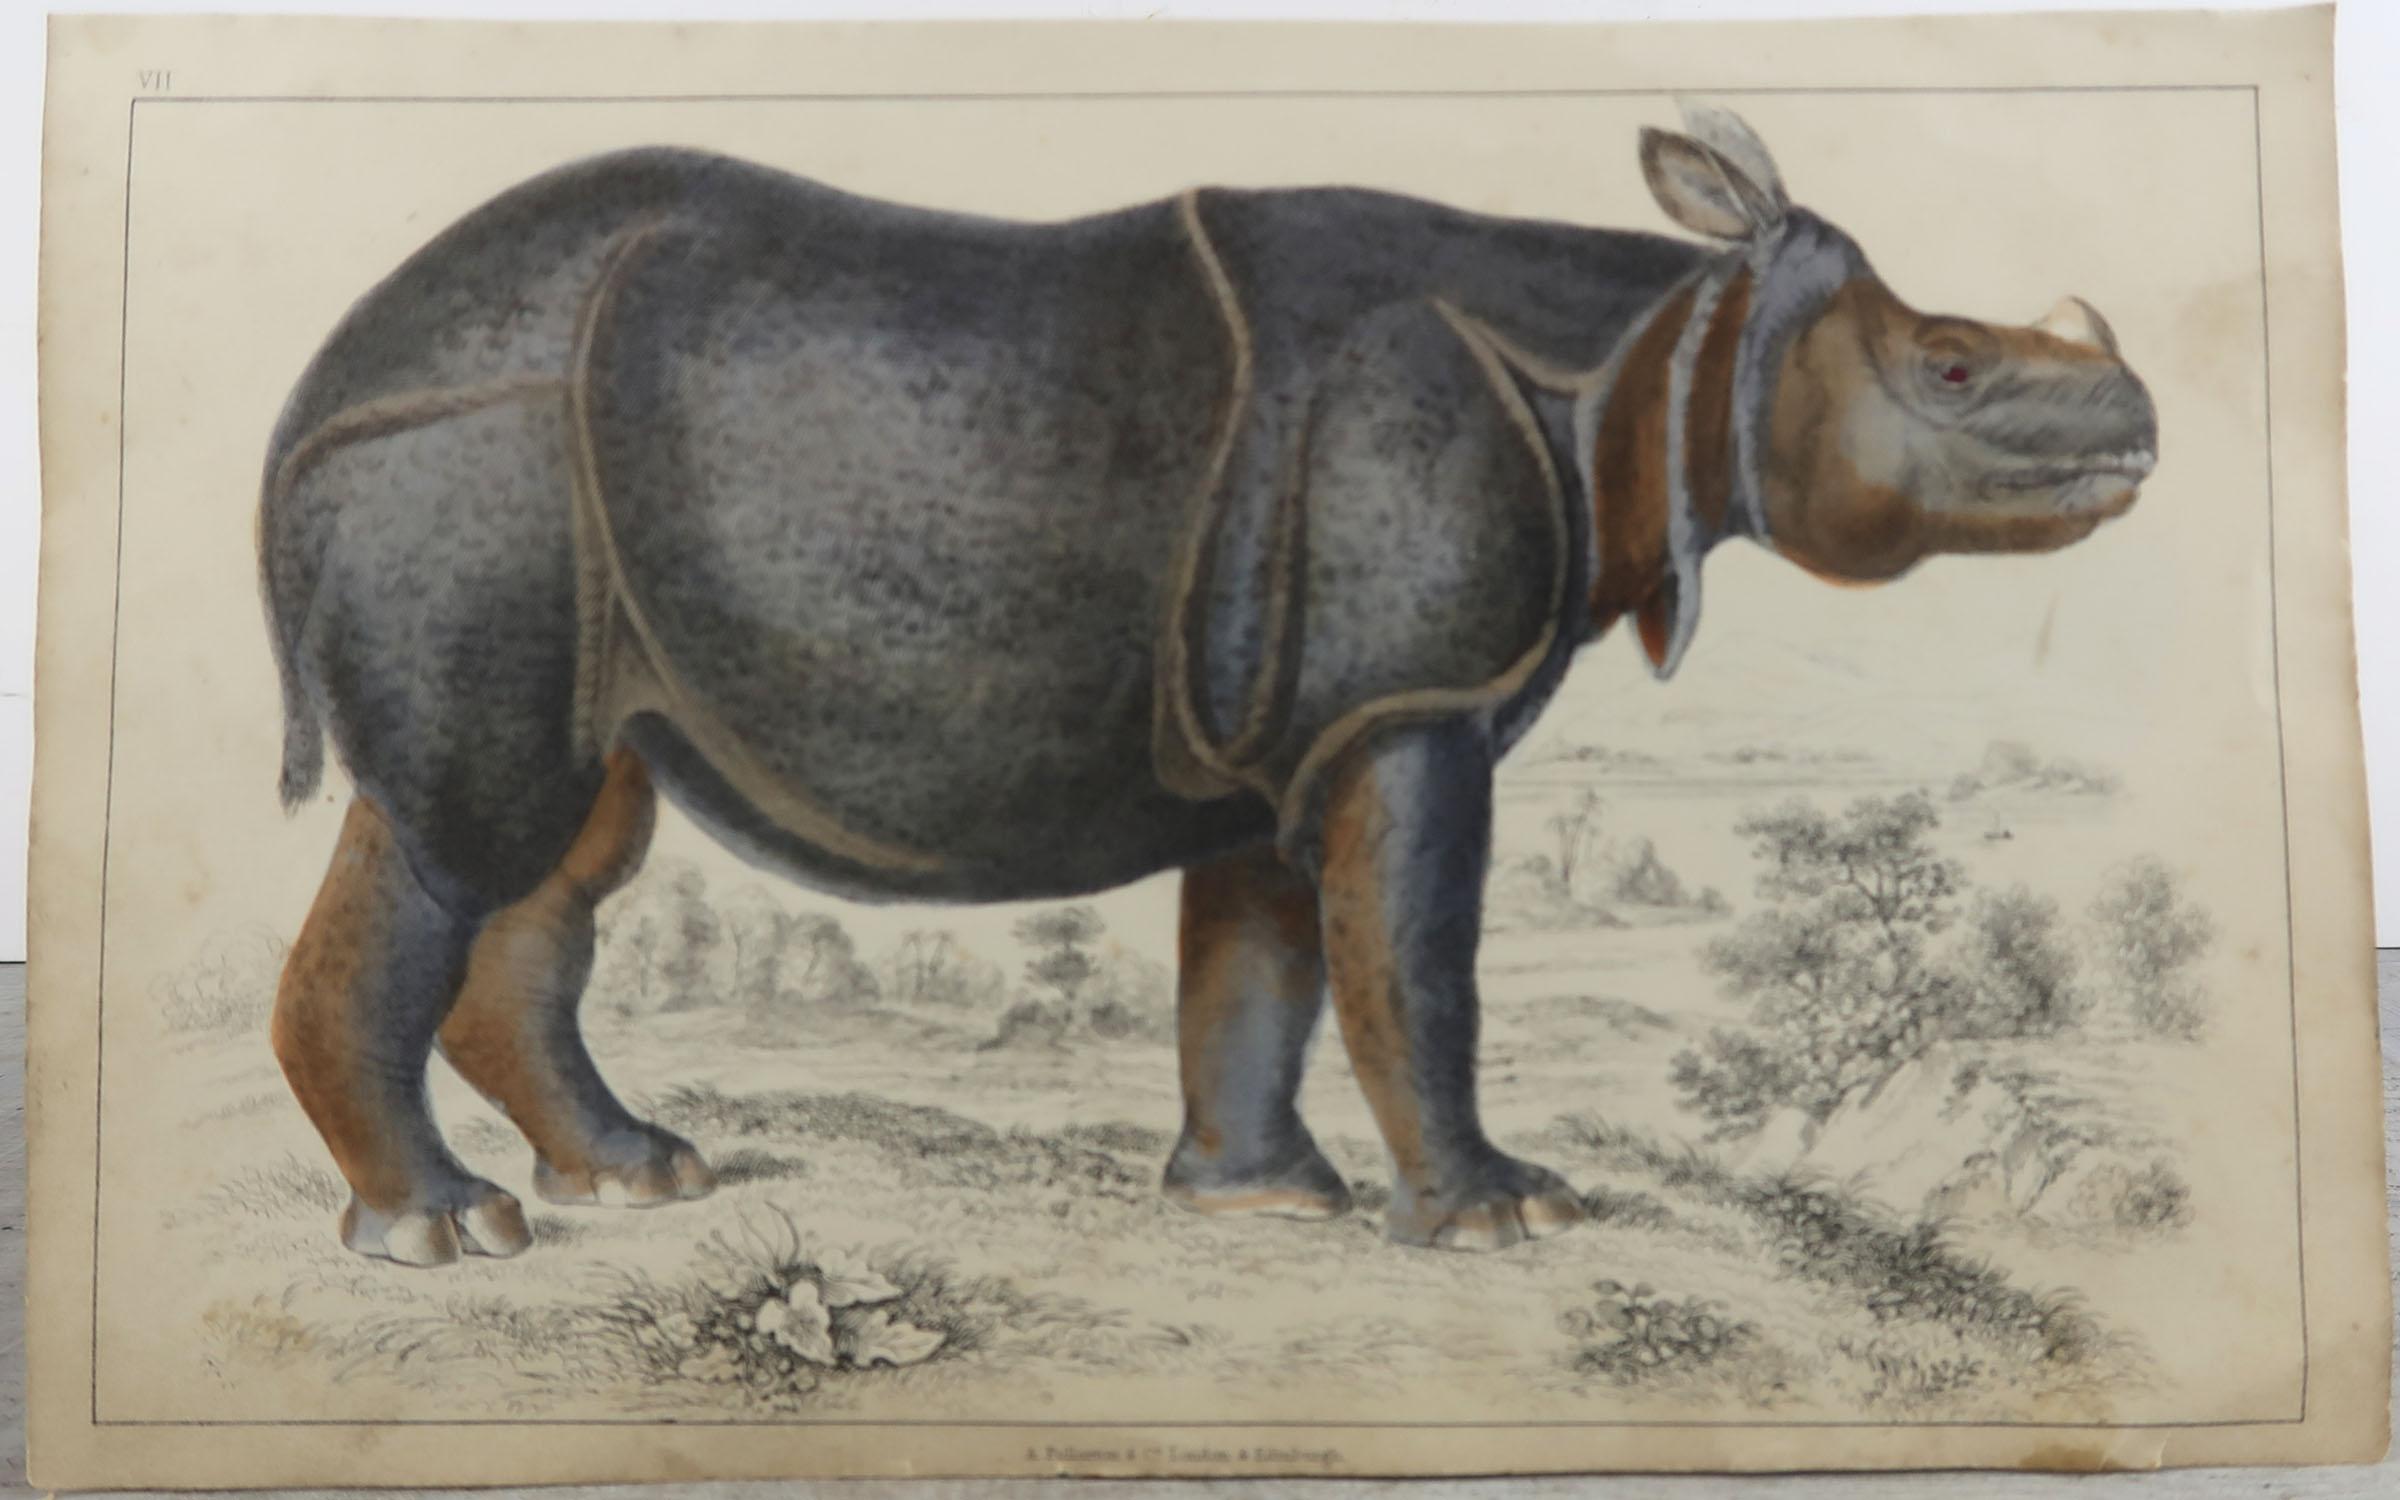 Folk Art Original Antique Print of a Rhinoceros, 1847 'Unframed'